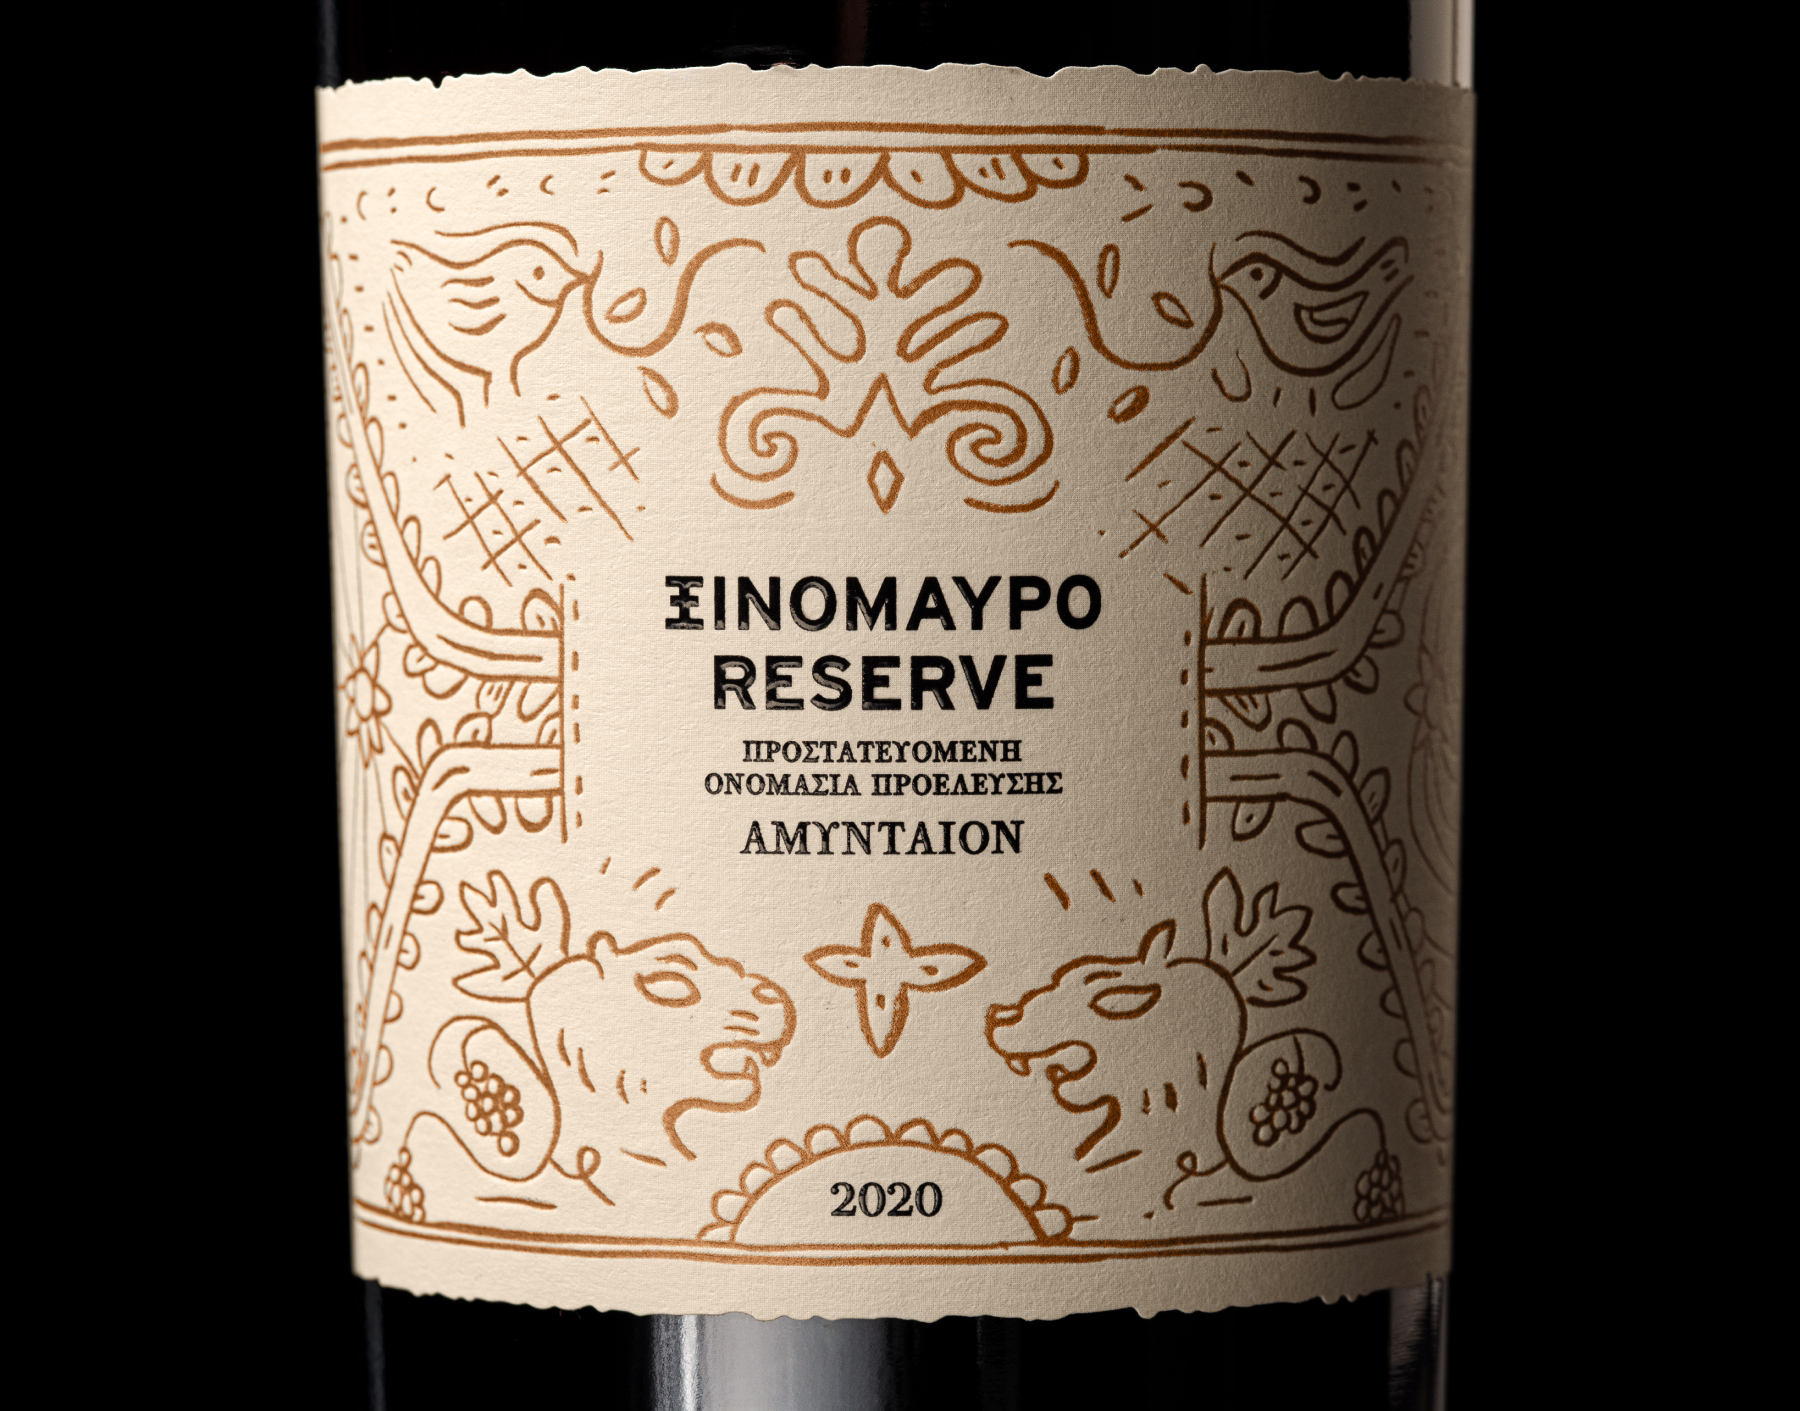 Classic Traits, Vintage Nostalgia, and Modern Type Combine This “Xinomavro Reserve” Wine Label of Lidl